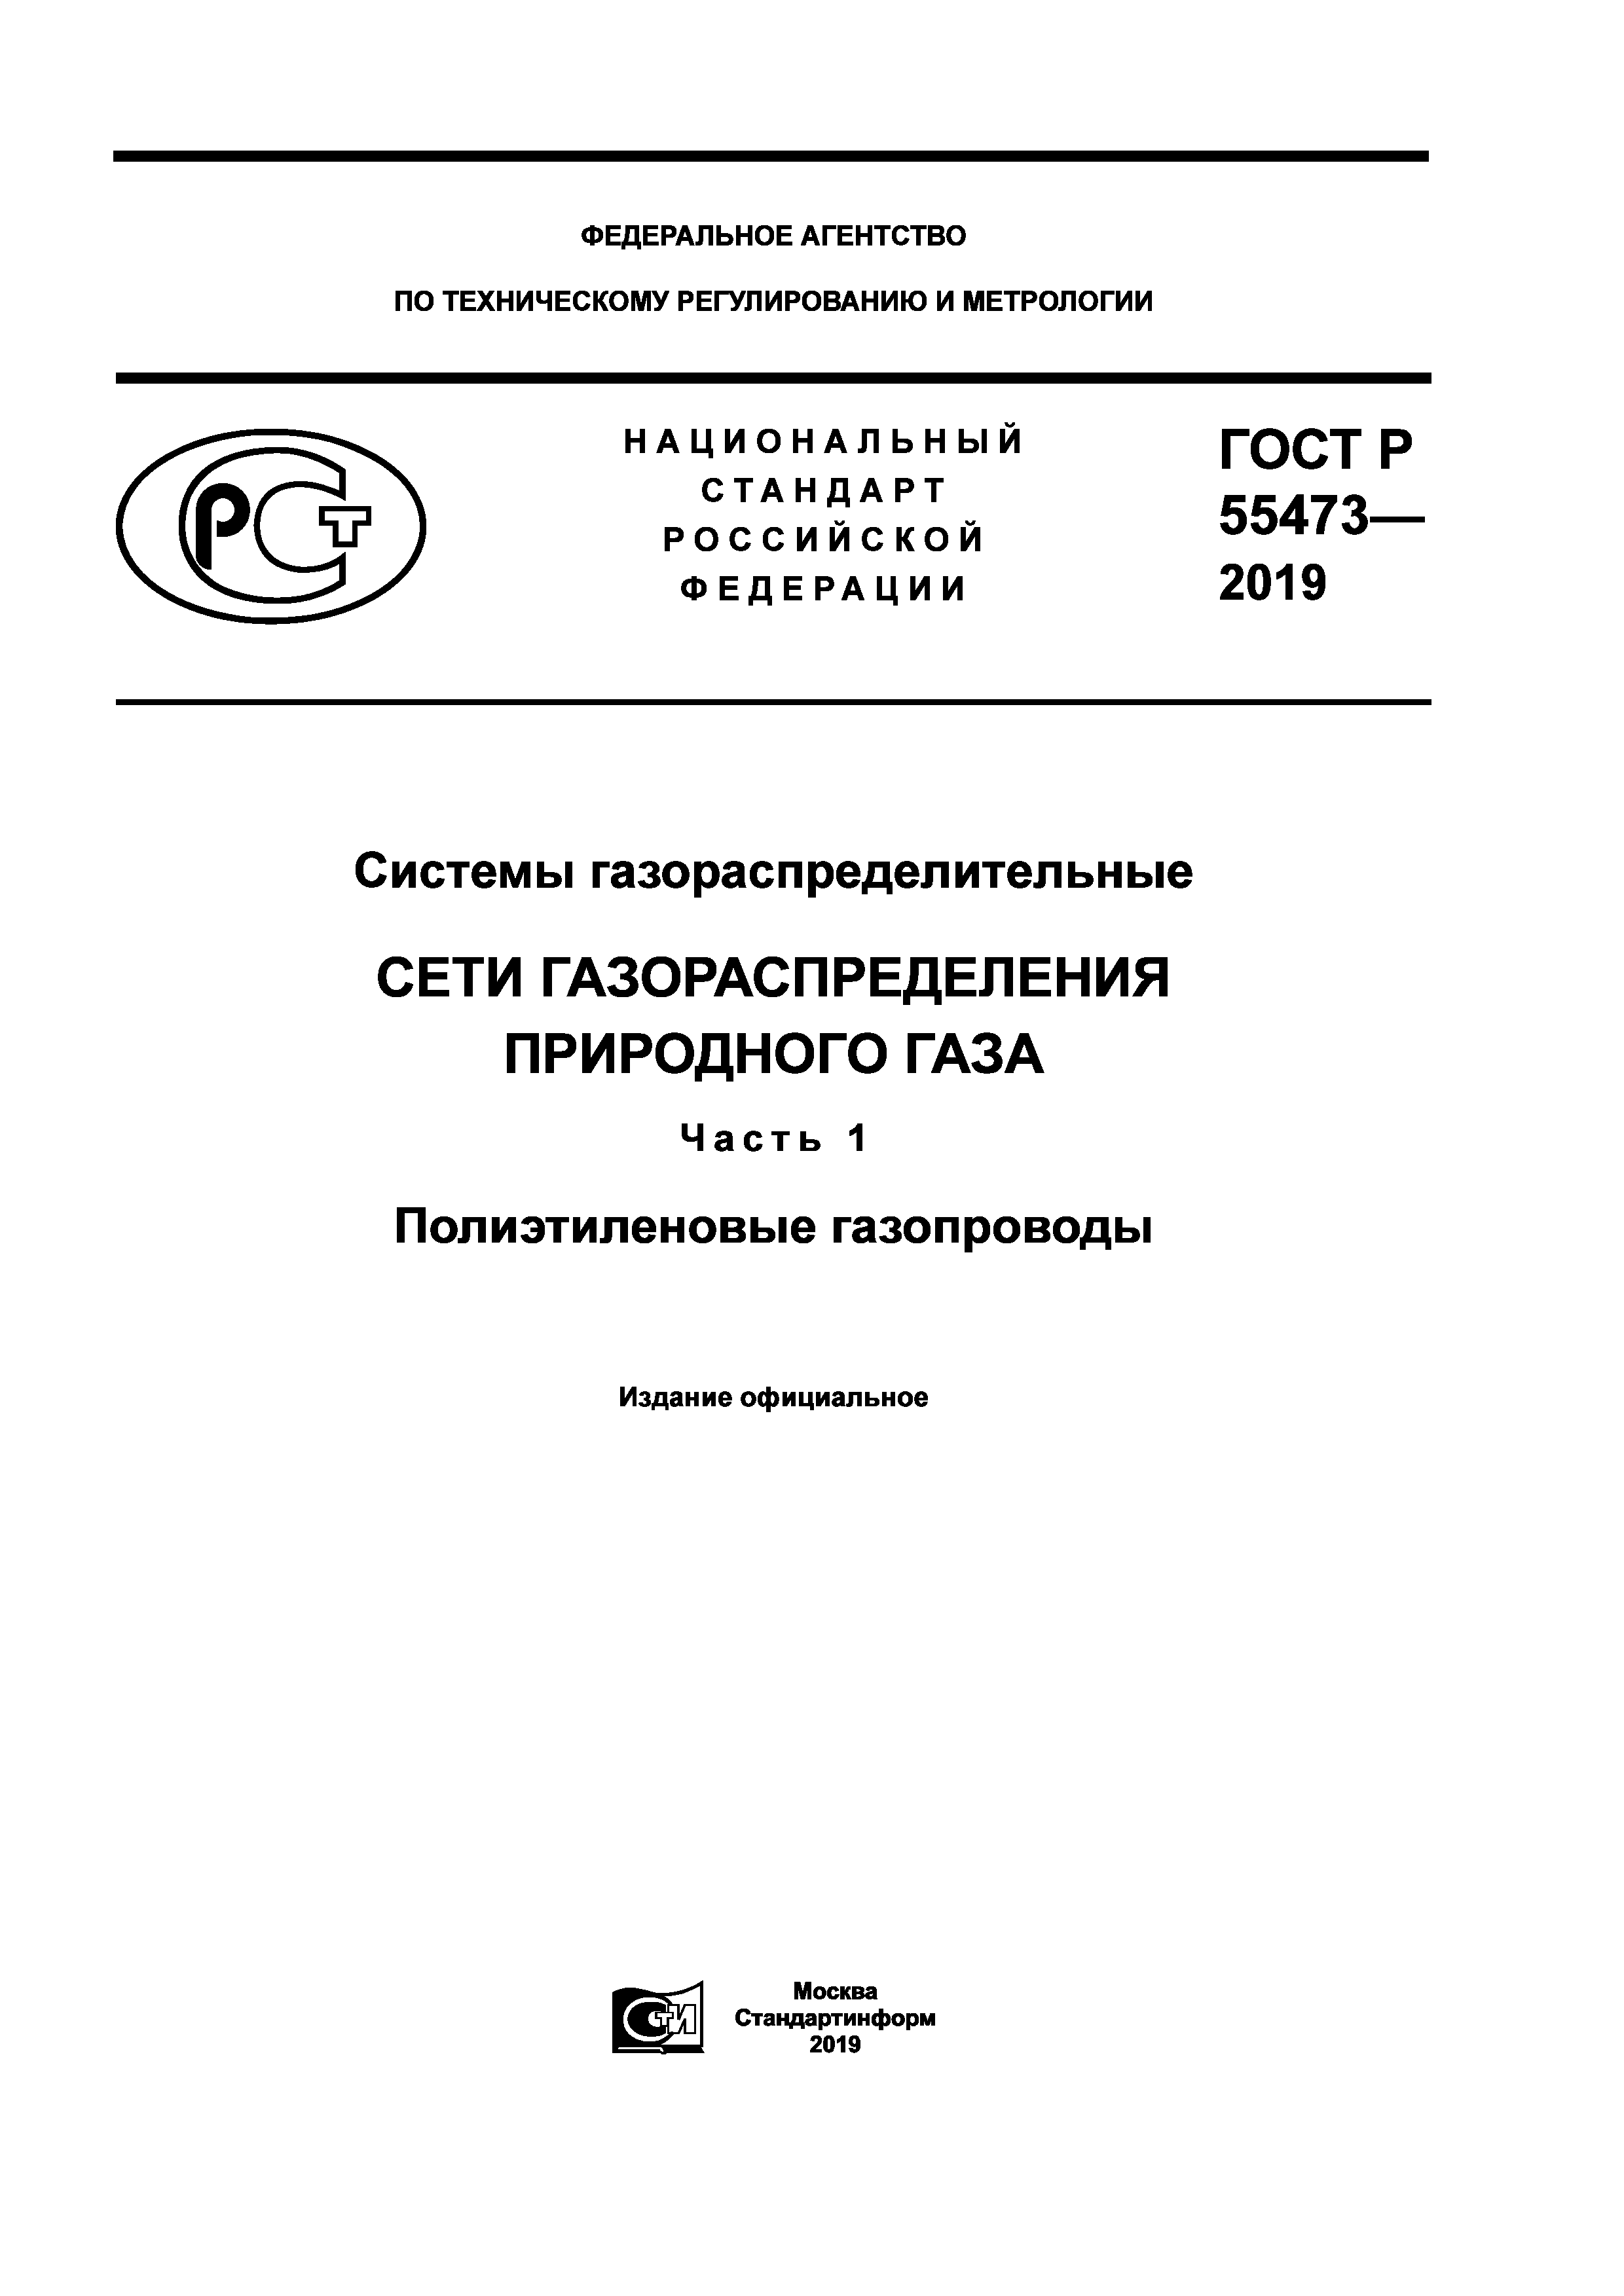 ГОСТ Р 55473-2019